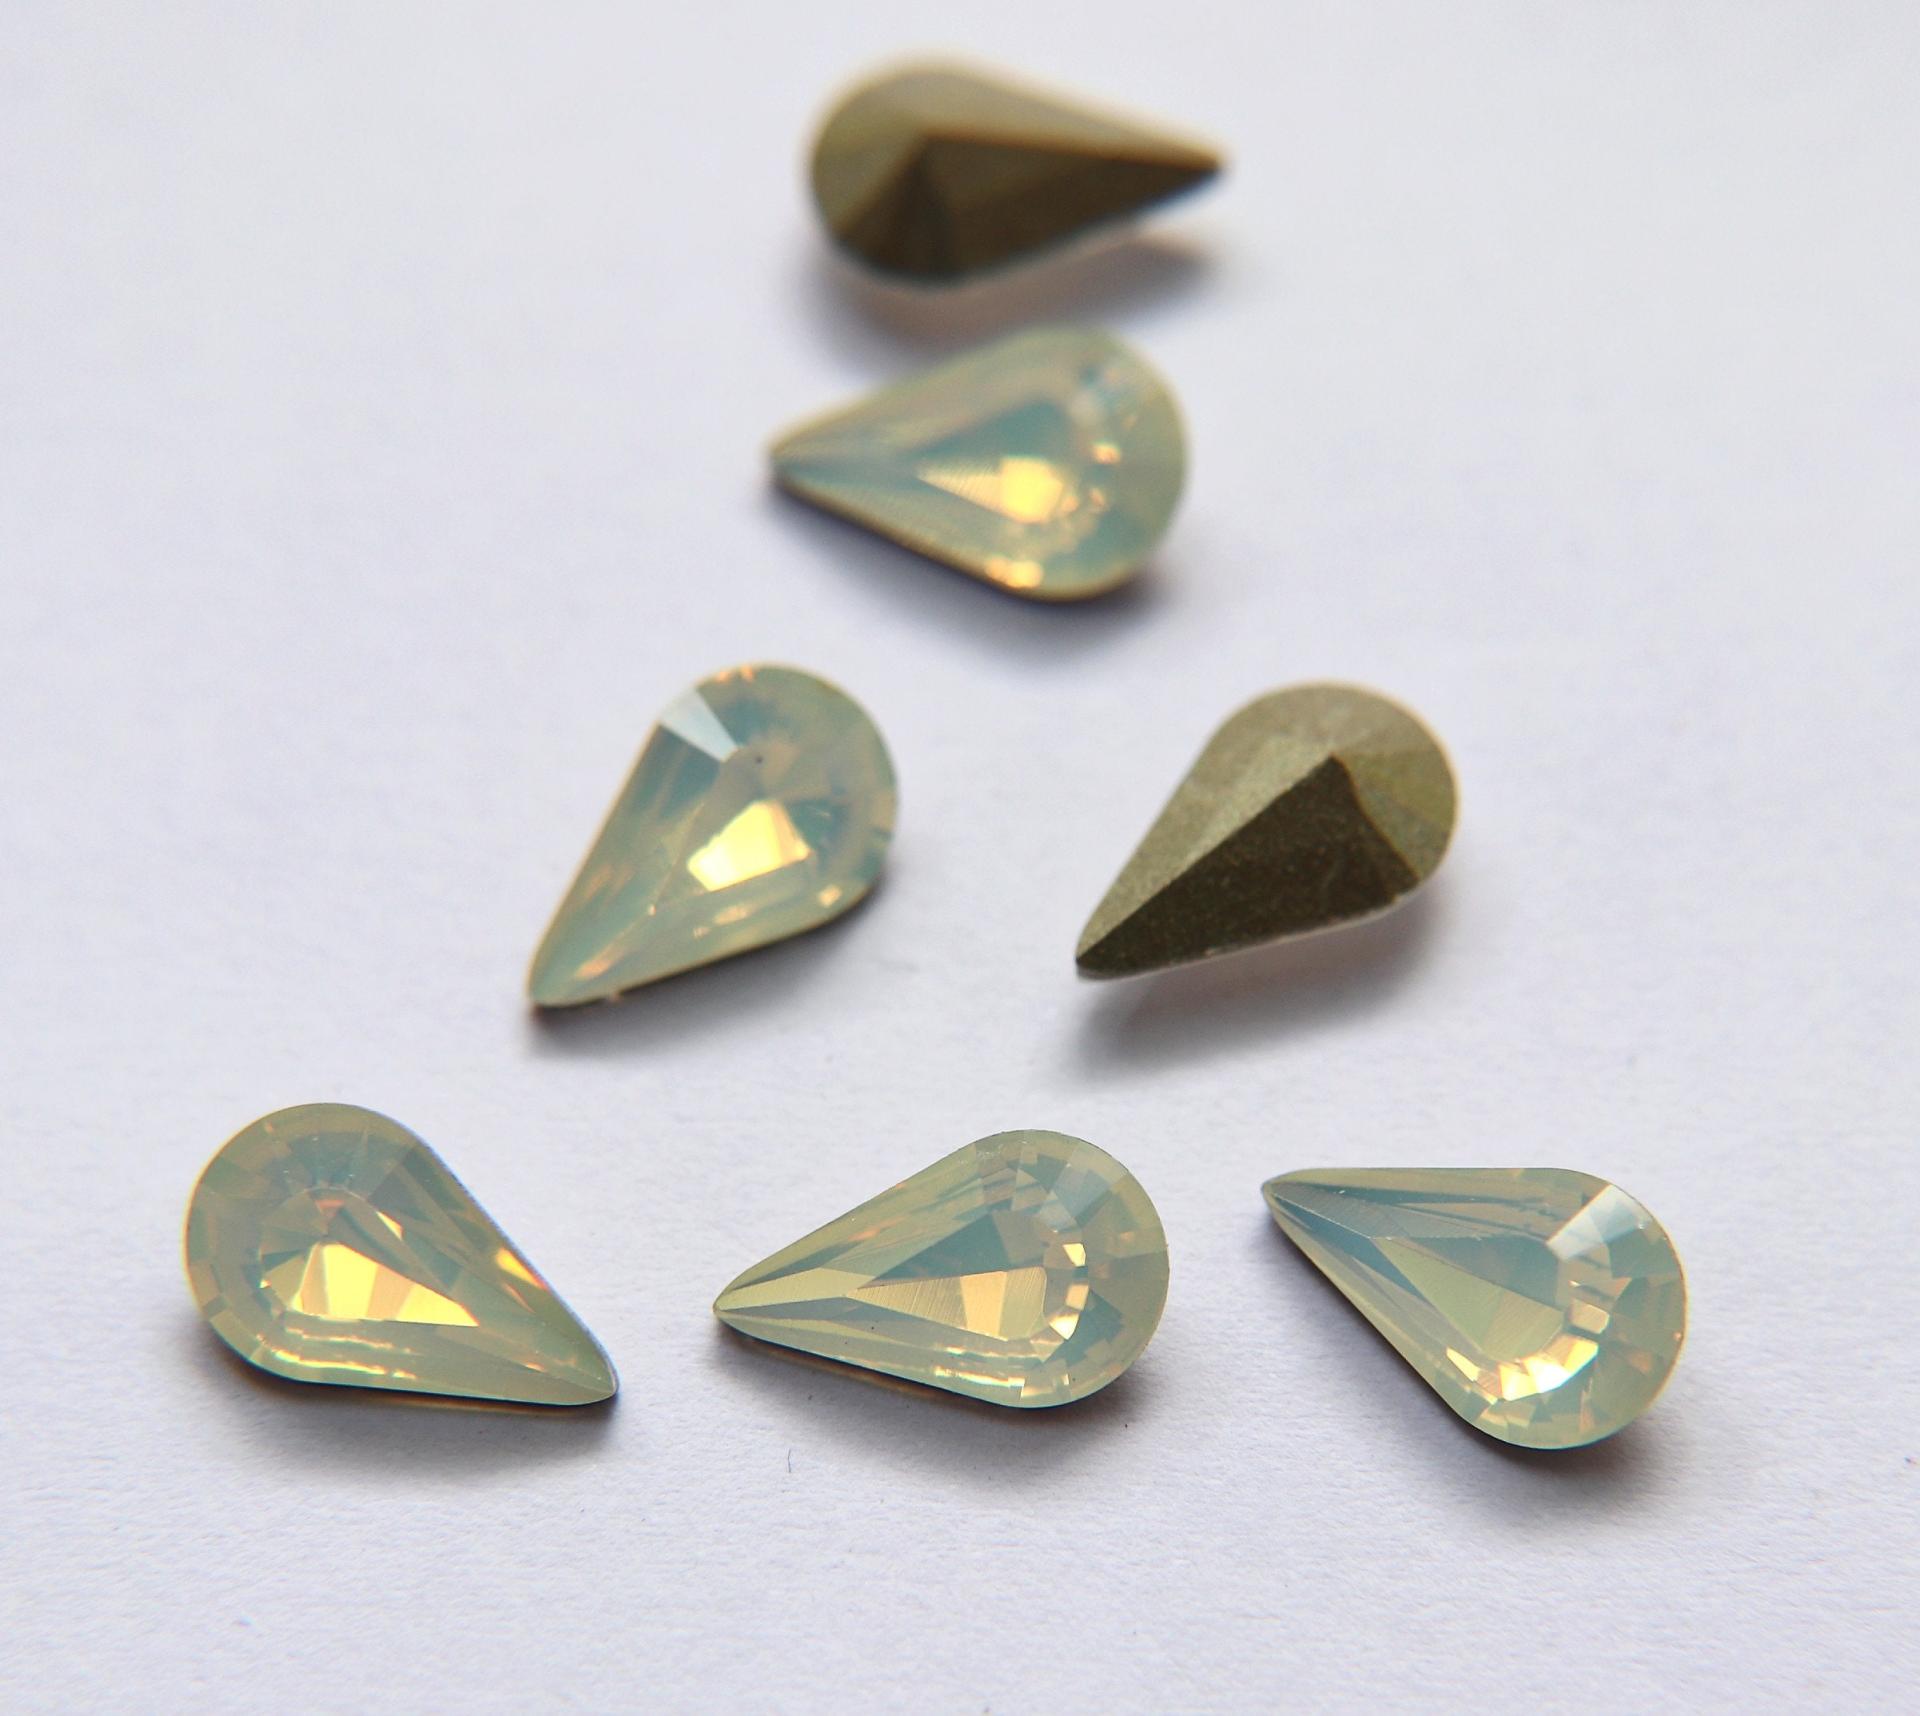 13x7.8mm Swarovski 4300 fancy Pear in (9 Colors) 2/6/24/72 Pieces Jewery making stones gemstones, fancy opal stones